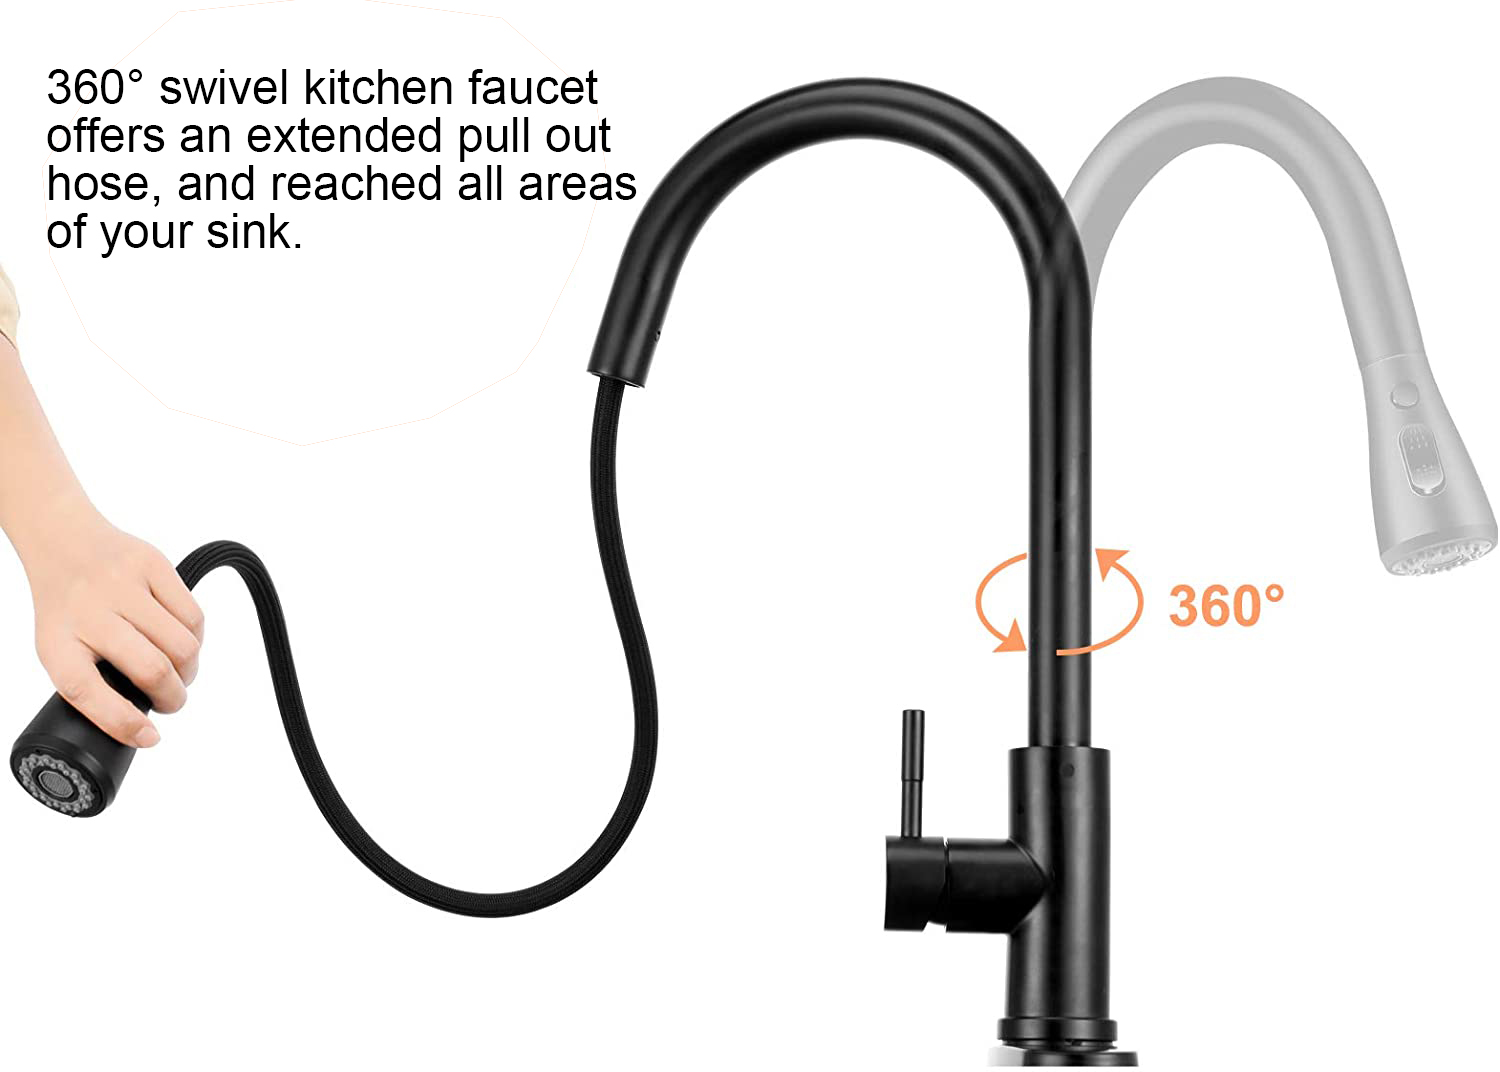 Venta superior Aquacubic Multi-Function Spray Single Hole Single Handle Pull-Down Kitchen Faucet